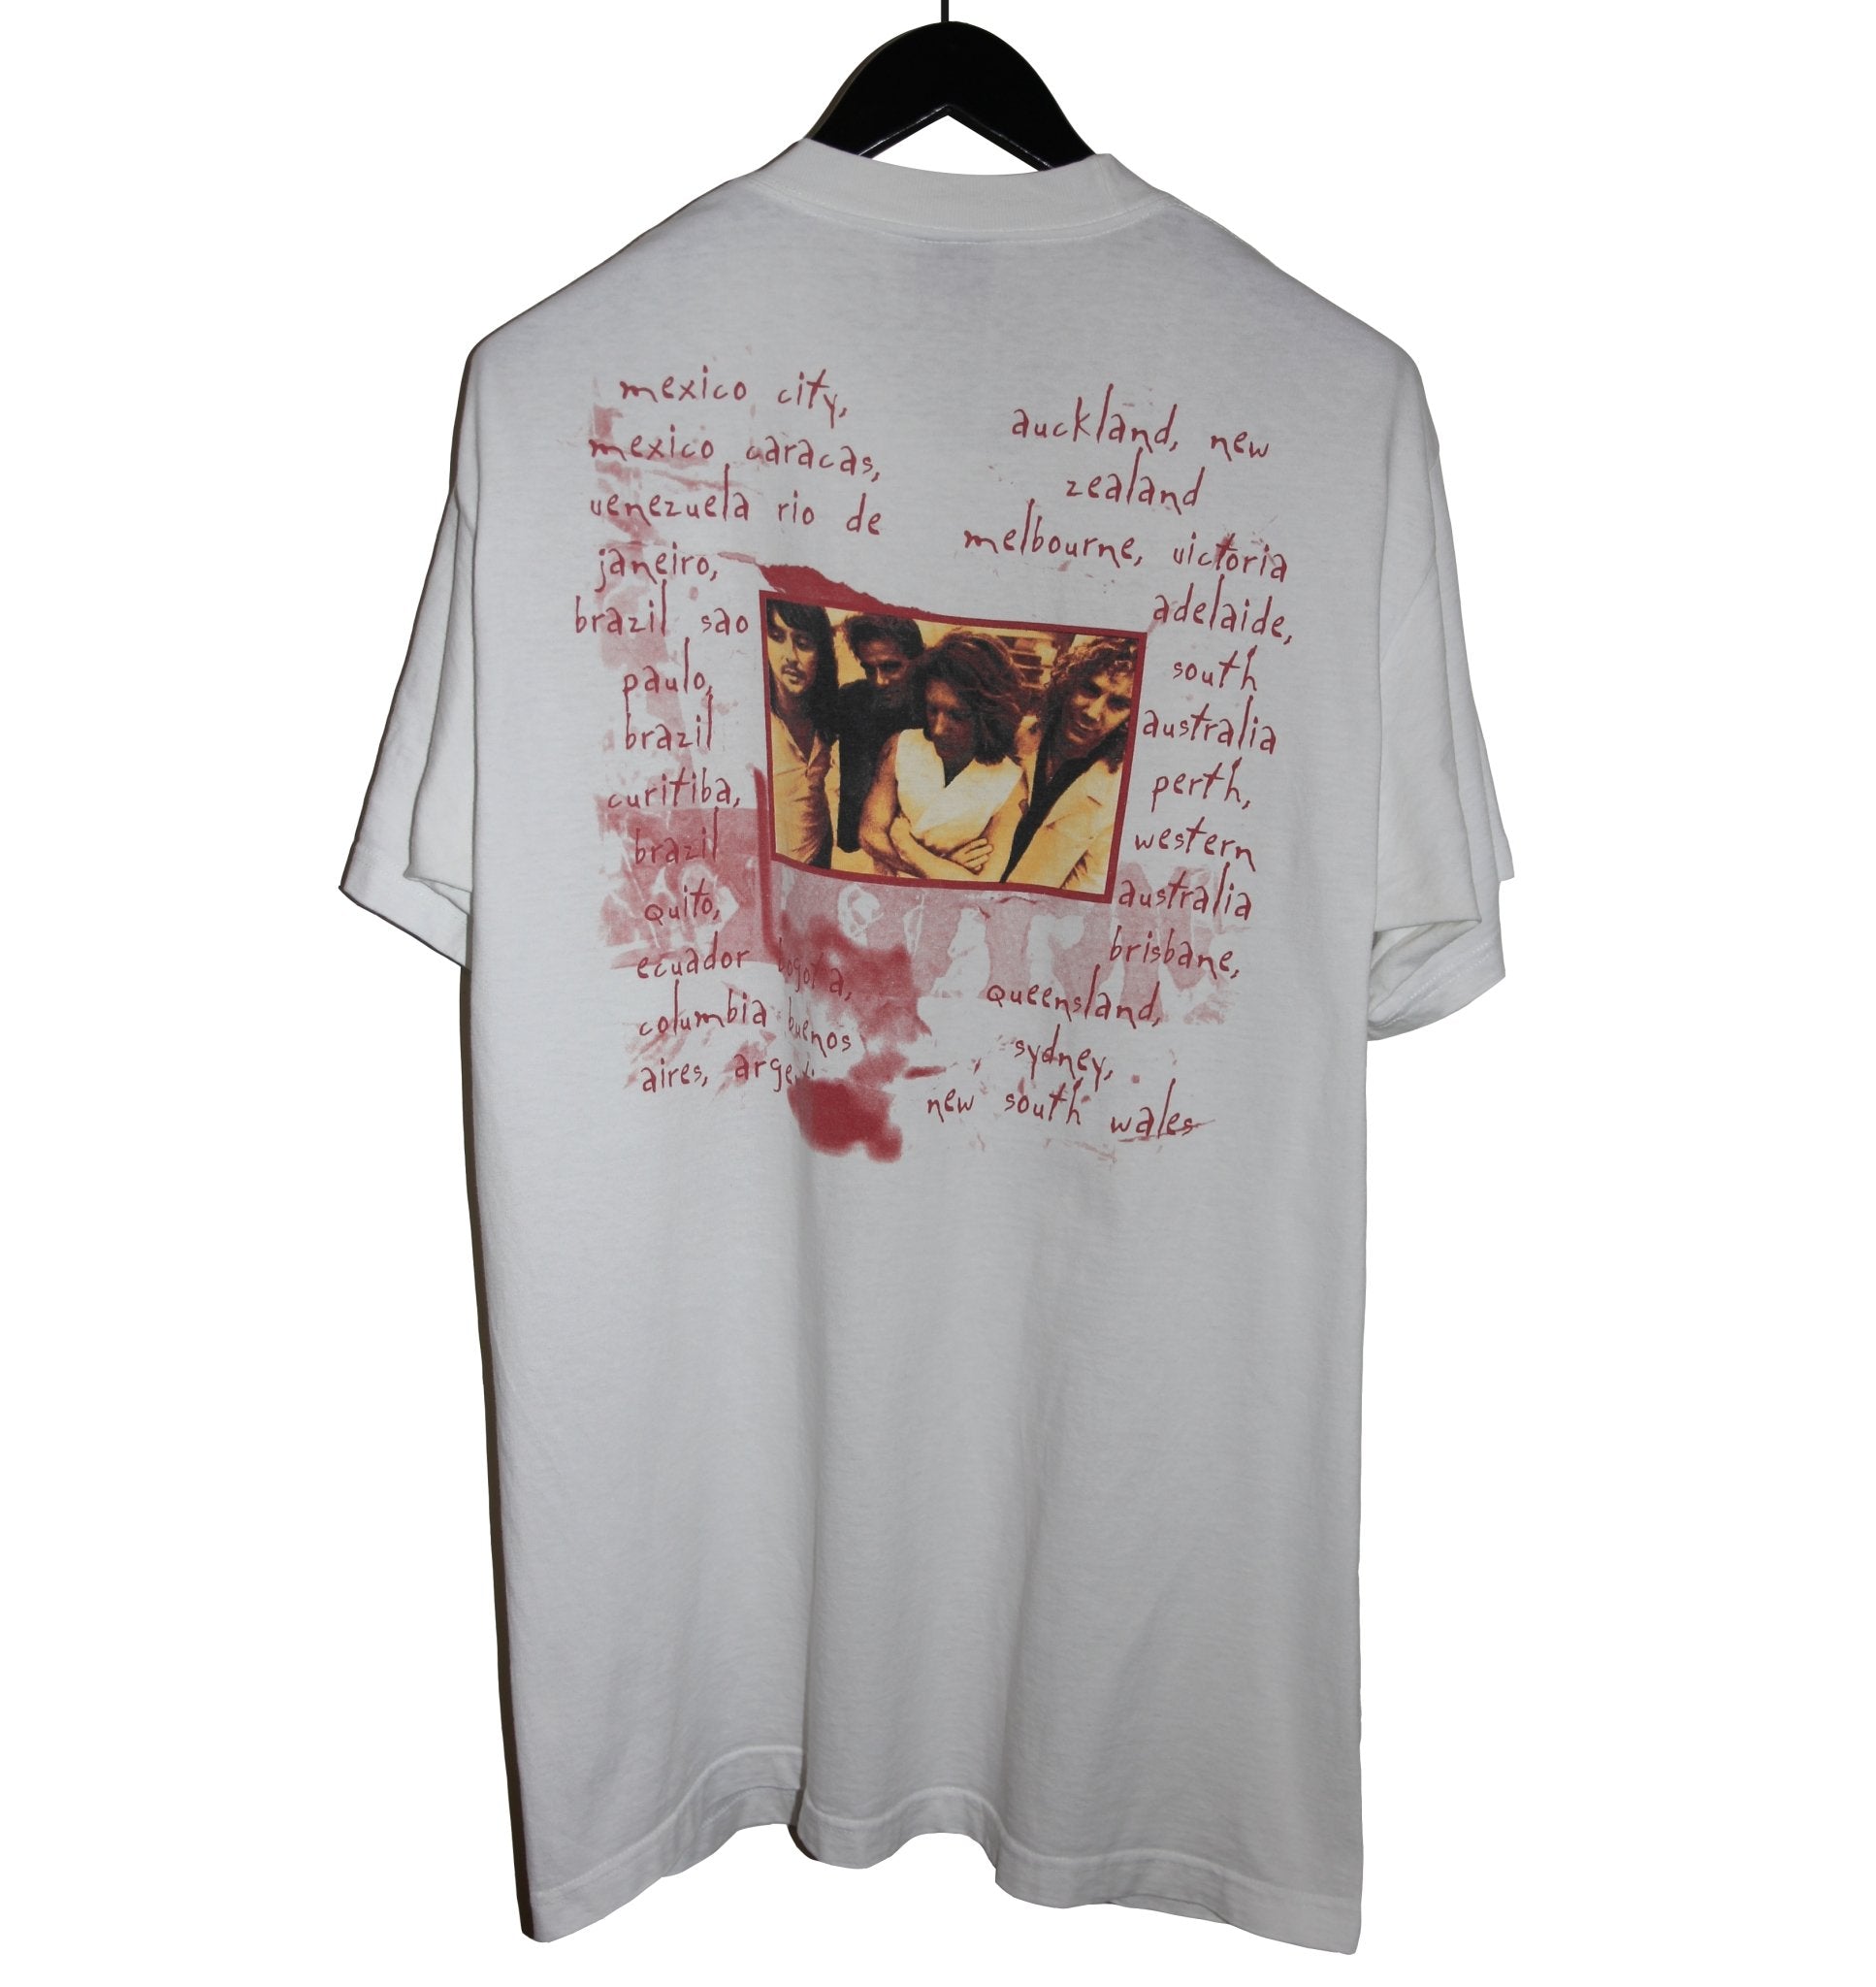 Bon Jovi 1995 These Days Tour Shirt - Faded AU